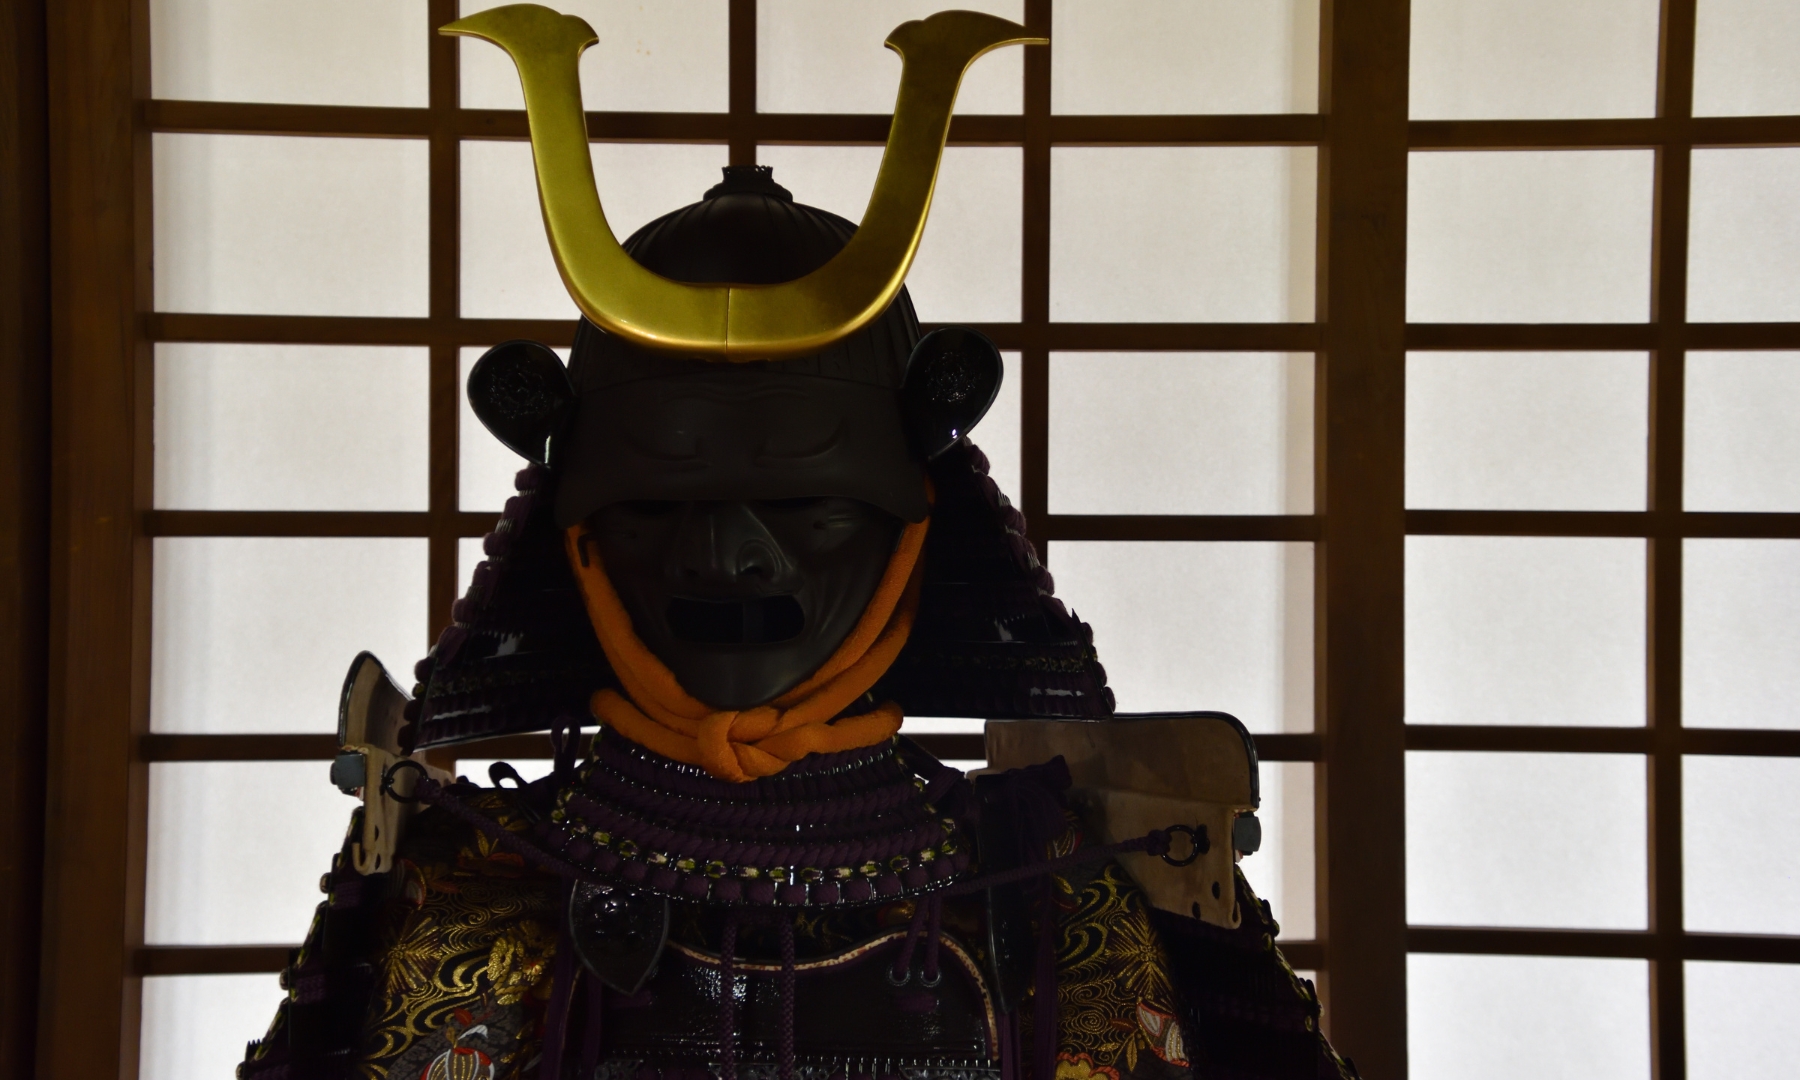 Samurai costume in a museum in Japan